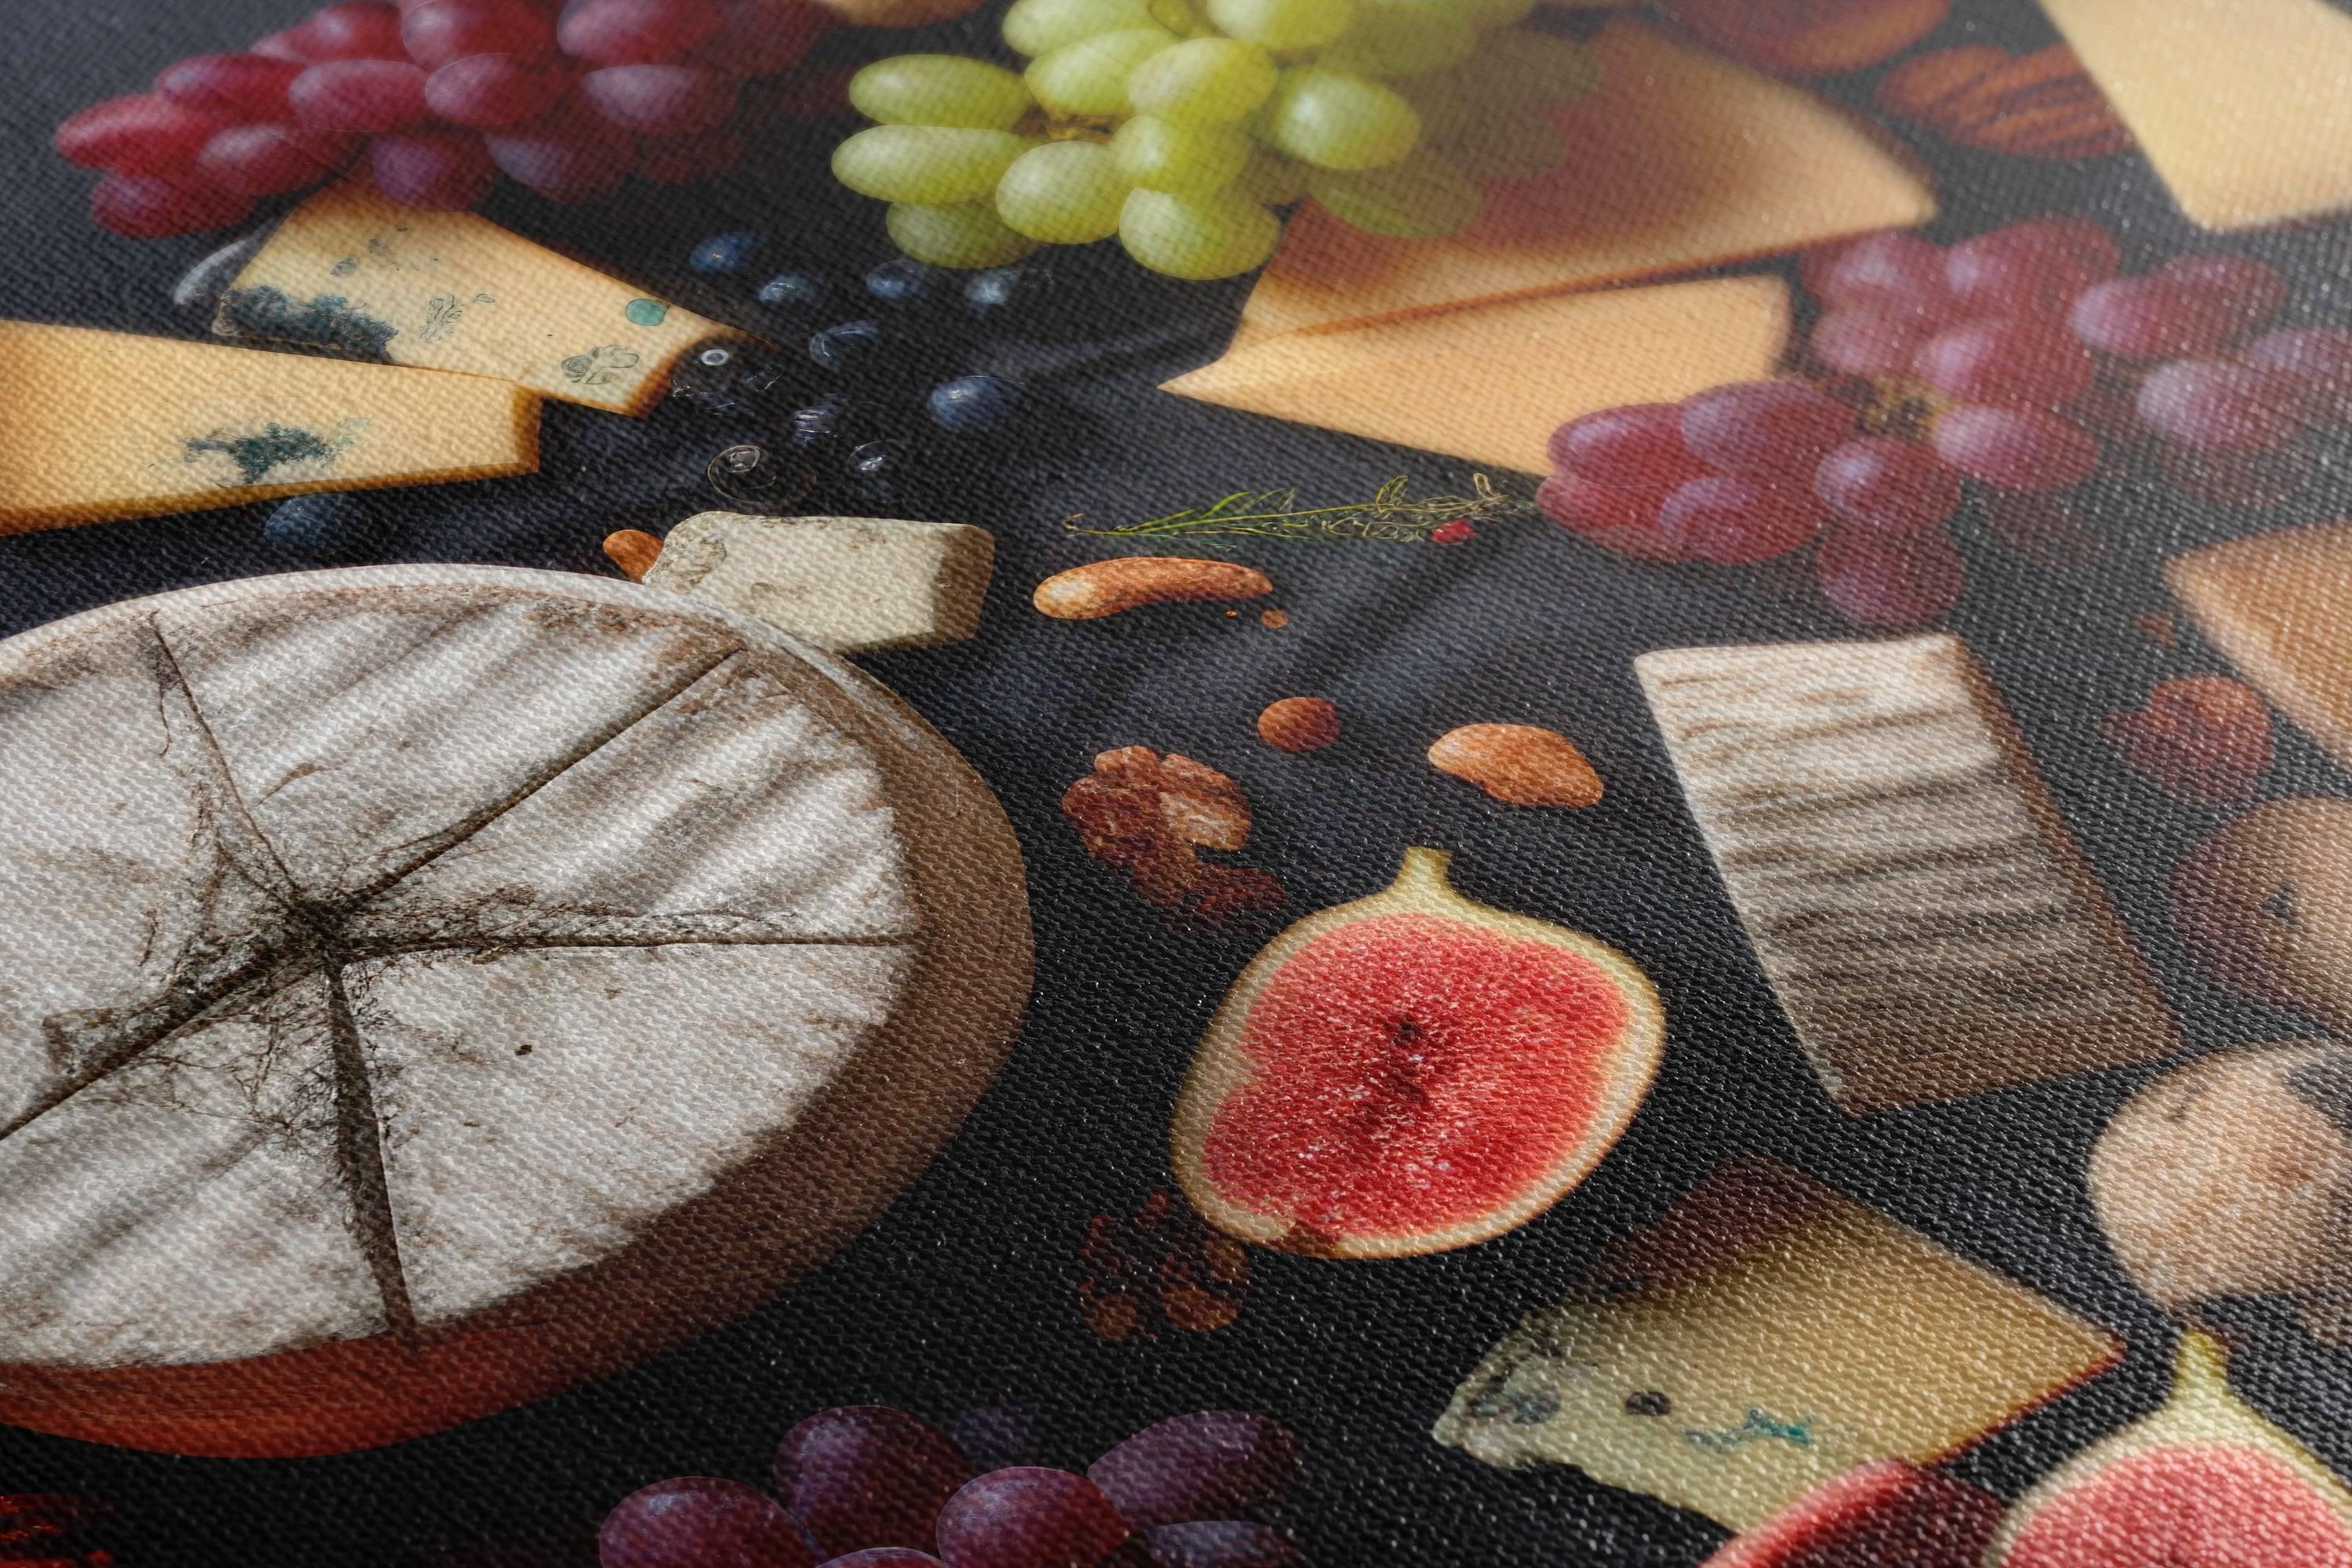 Elegant Cheese and Fruit Arrangement - Canvas Print - Artoholica Ready to Hang Canvas Print